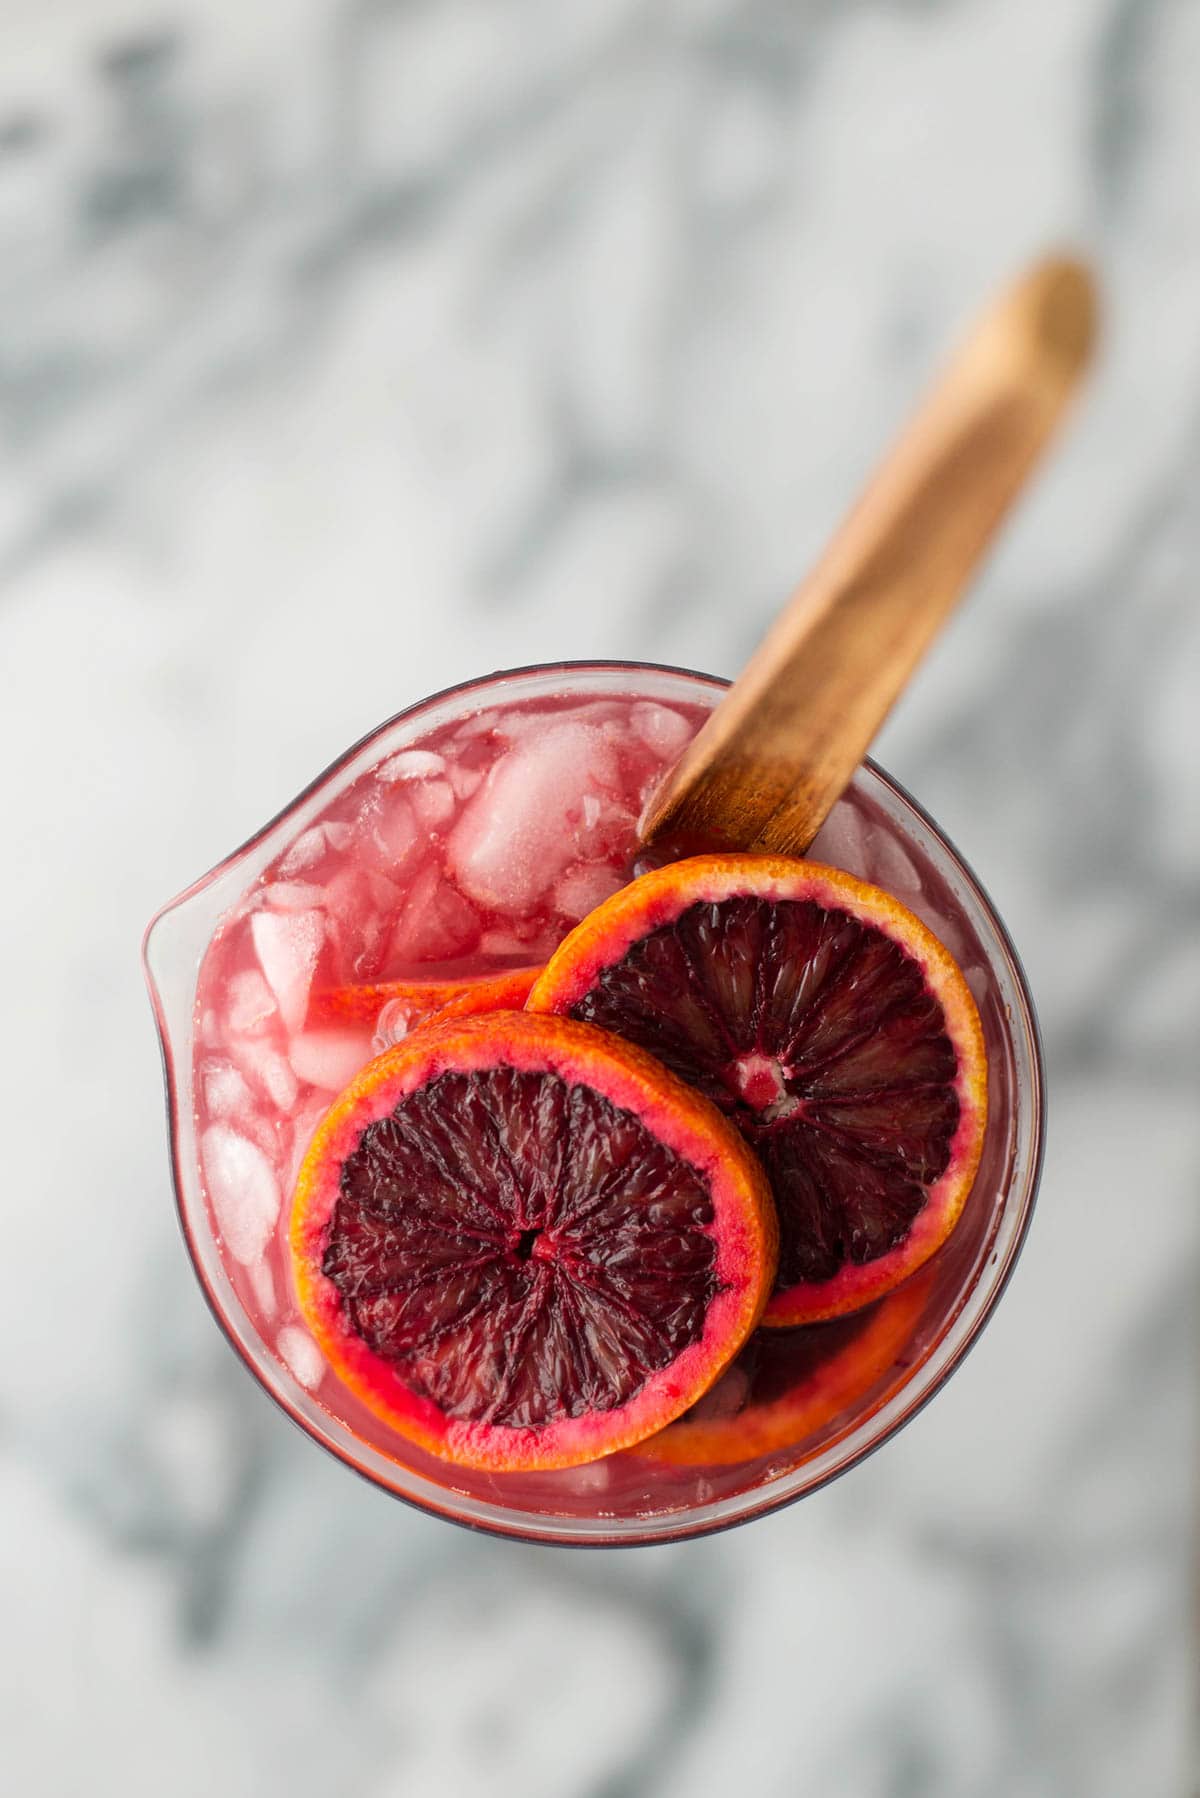 Blood orange sangria recipe by Sugar & Cloth, an award winning DIY and recipe blog.